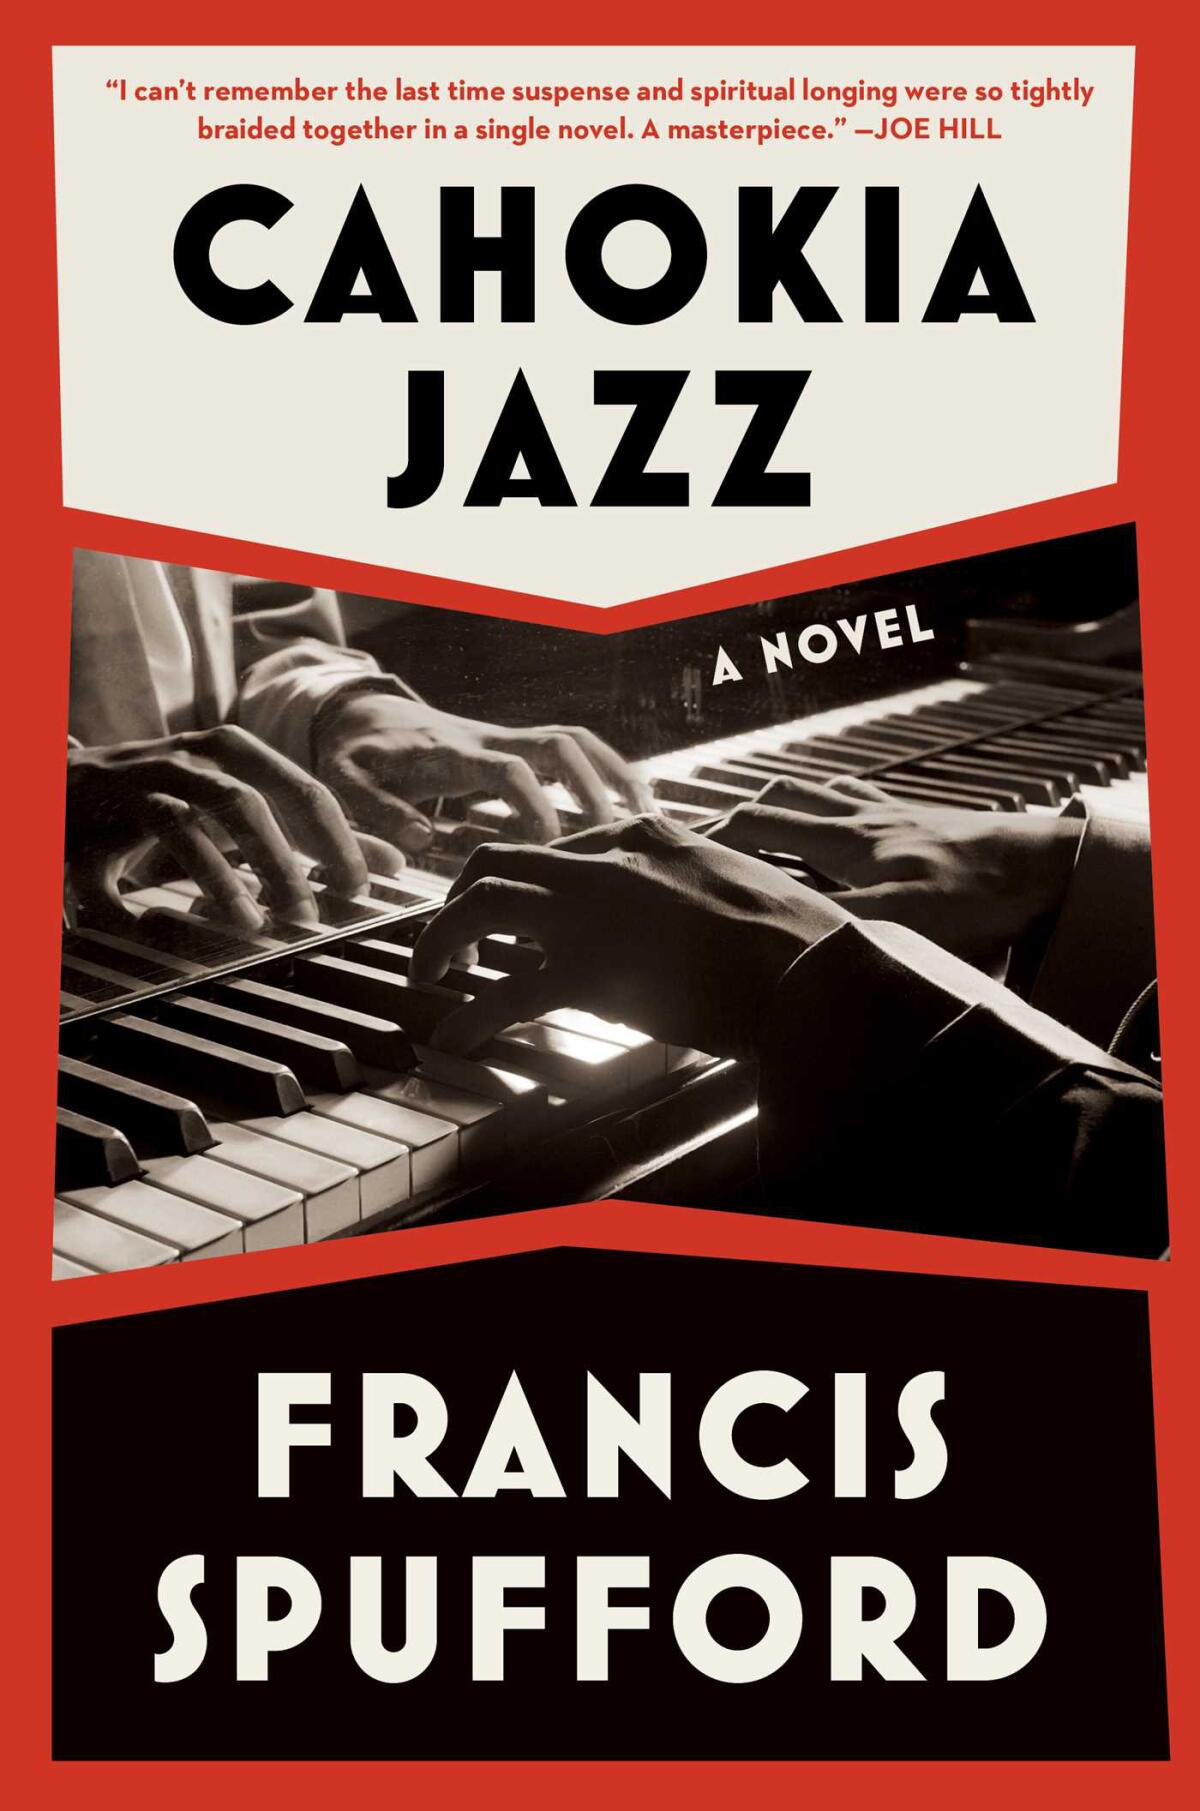 "Cahokia Jazz" by Francis Spufford